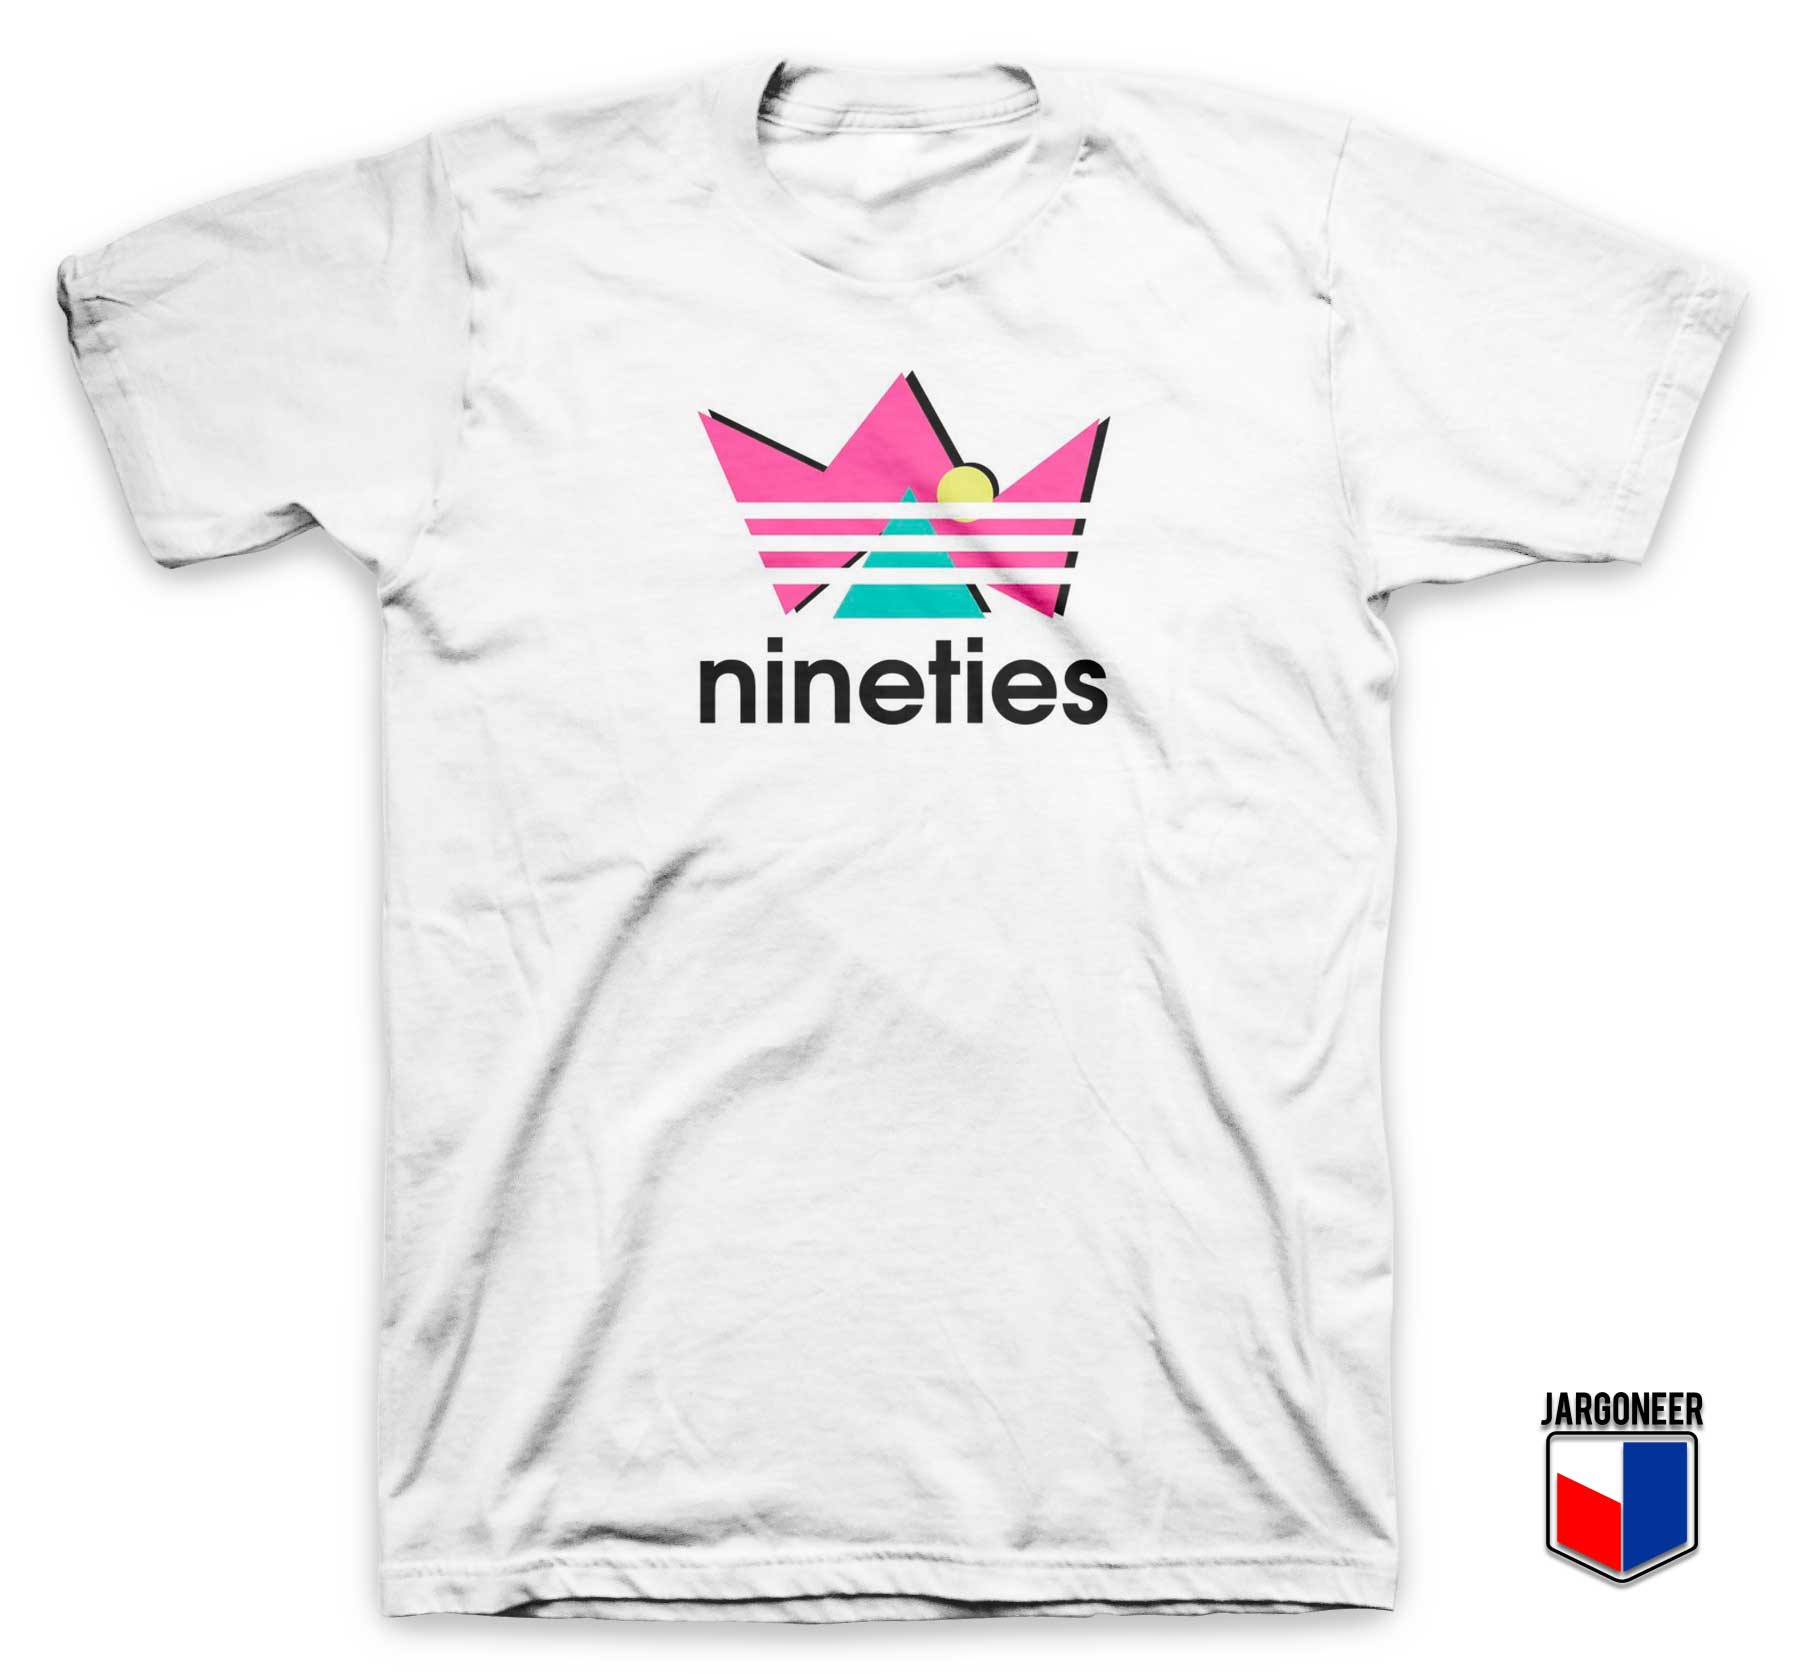 Nineties Is Back T Shirt - Shop Unique Graphic Cool Shirt Designs